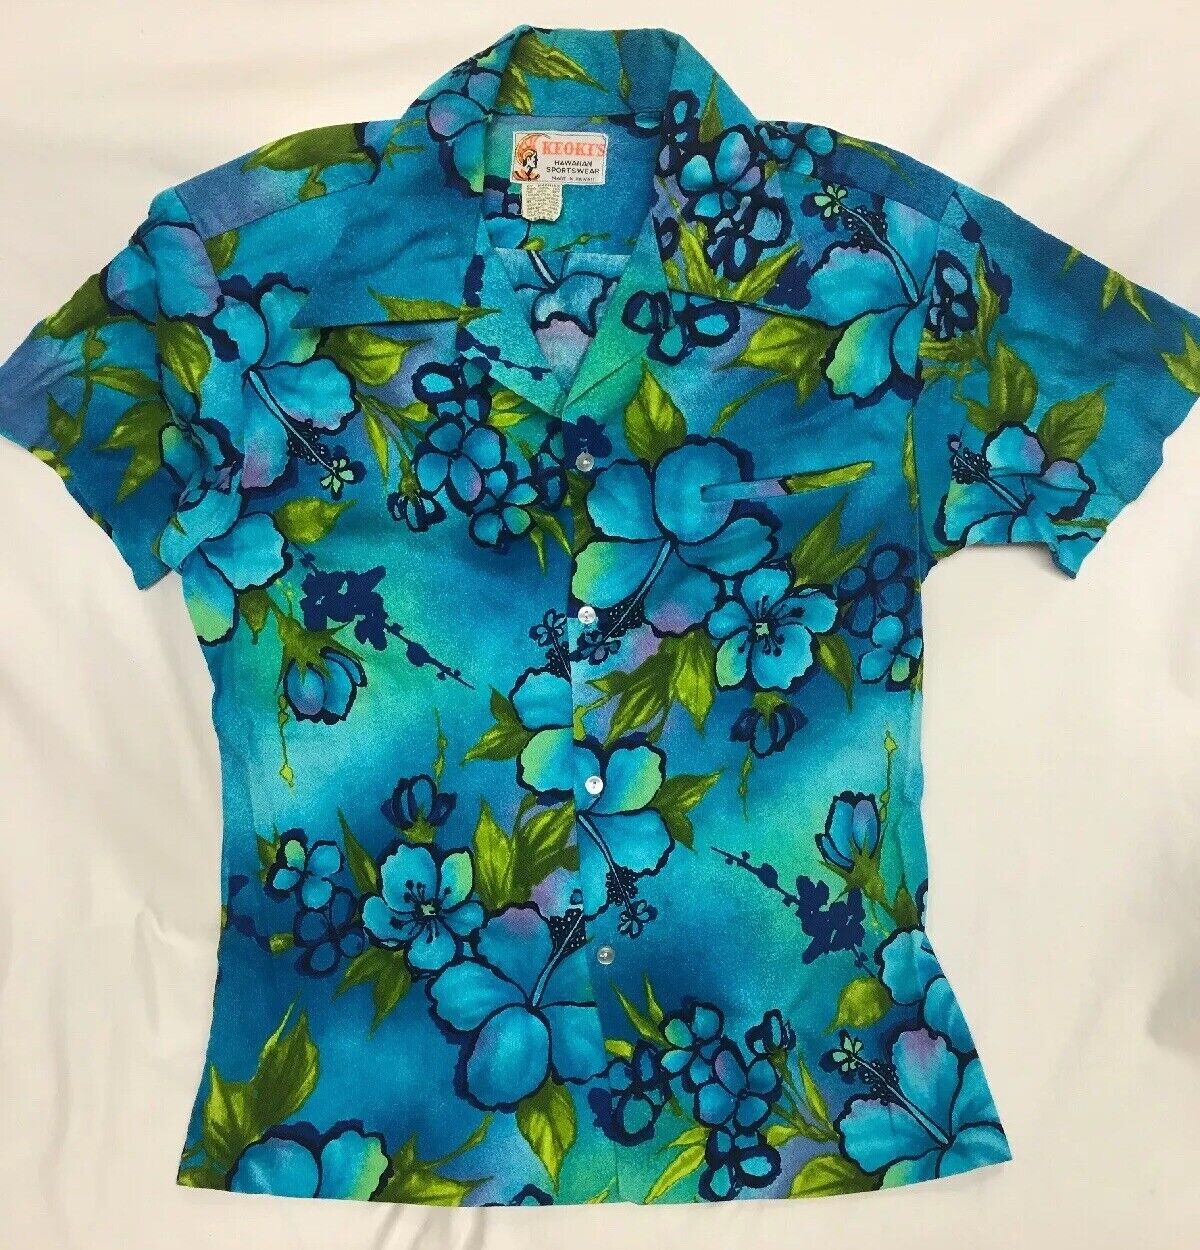 Keoki’s Sportswear Men's M/L Vintage Hawaiian Shirt Hibiscus Aloha Barkcloth